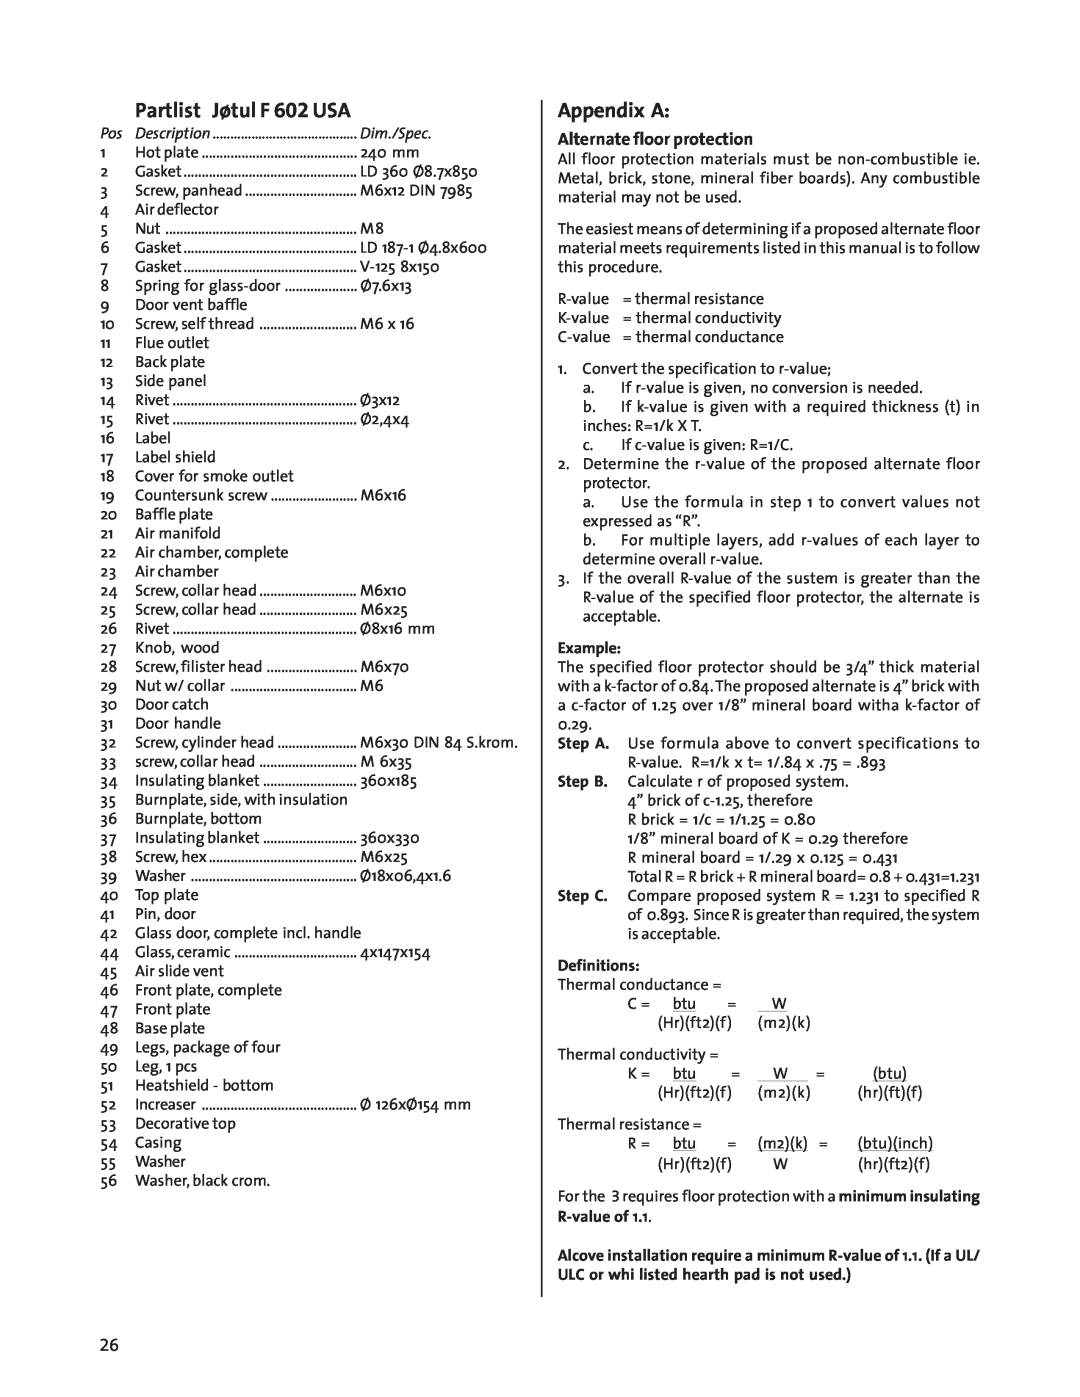 Jotul Wood Stove manual Partlist Jøtul F 602 USA, Appendix A, Definitions, R-valueof 